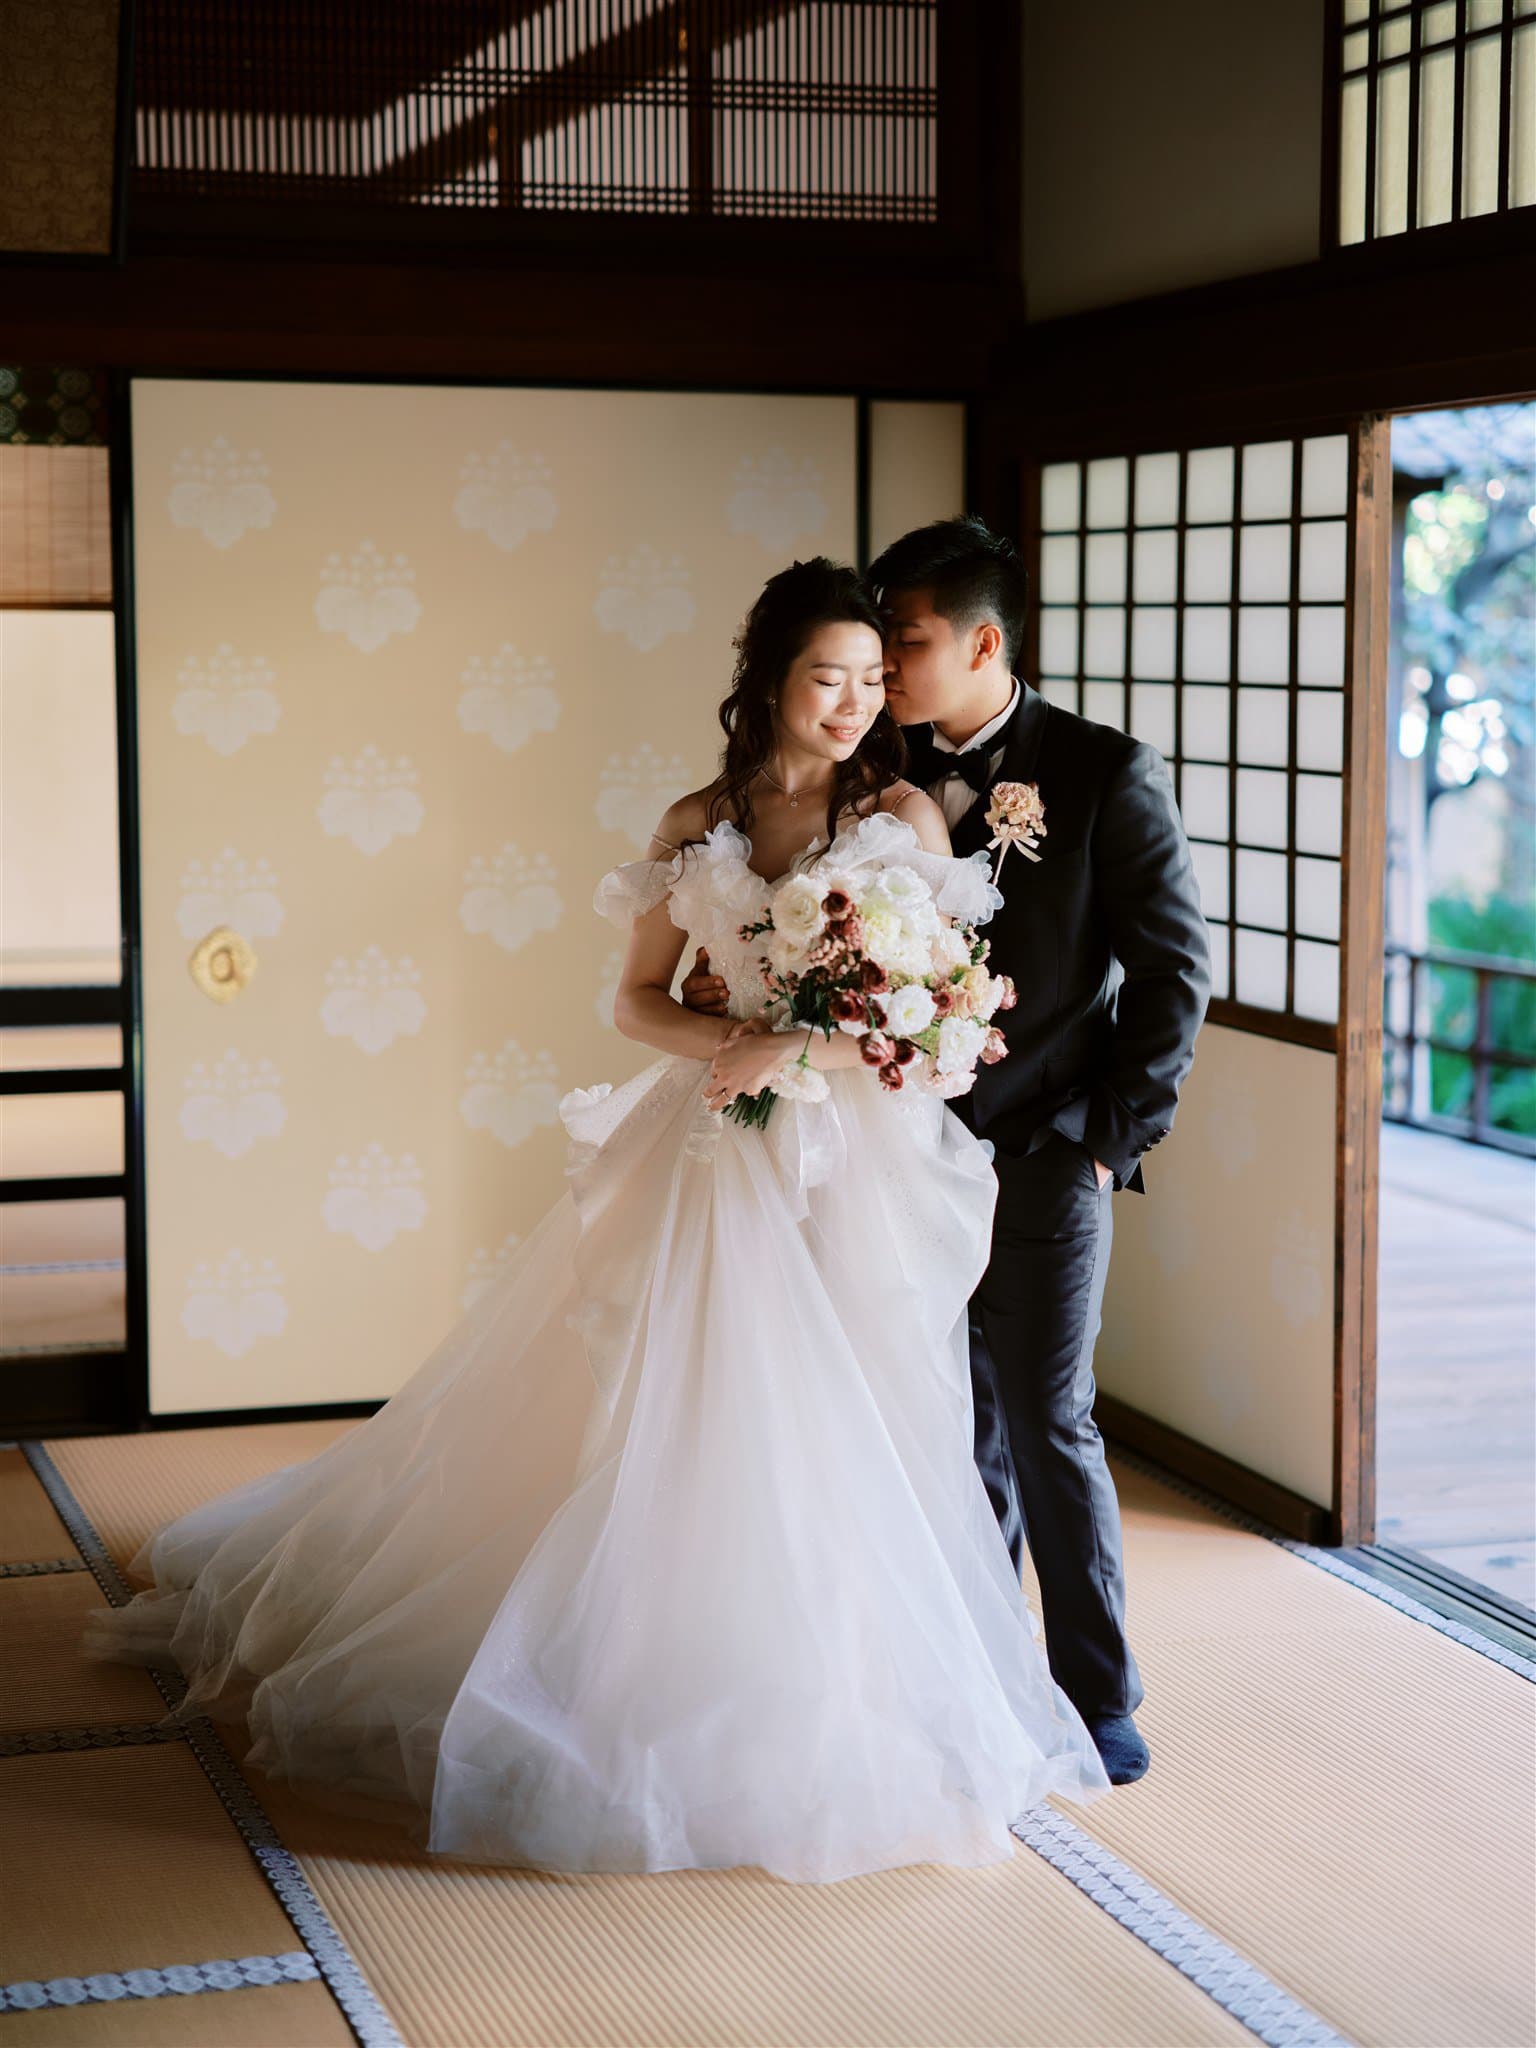 Kyoto Tokyo Japan Elopement Wedding Photographer, Planner & Videographer | An enchanting Japanese elopement captured by a talented photographer.